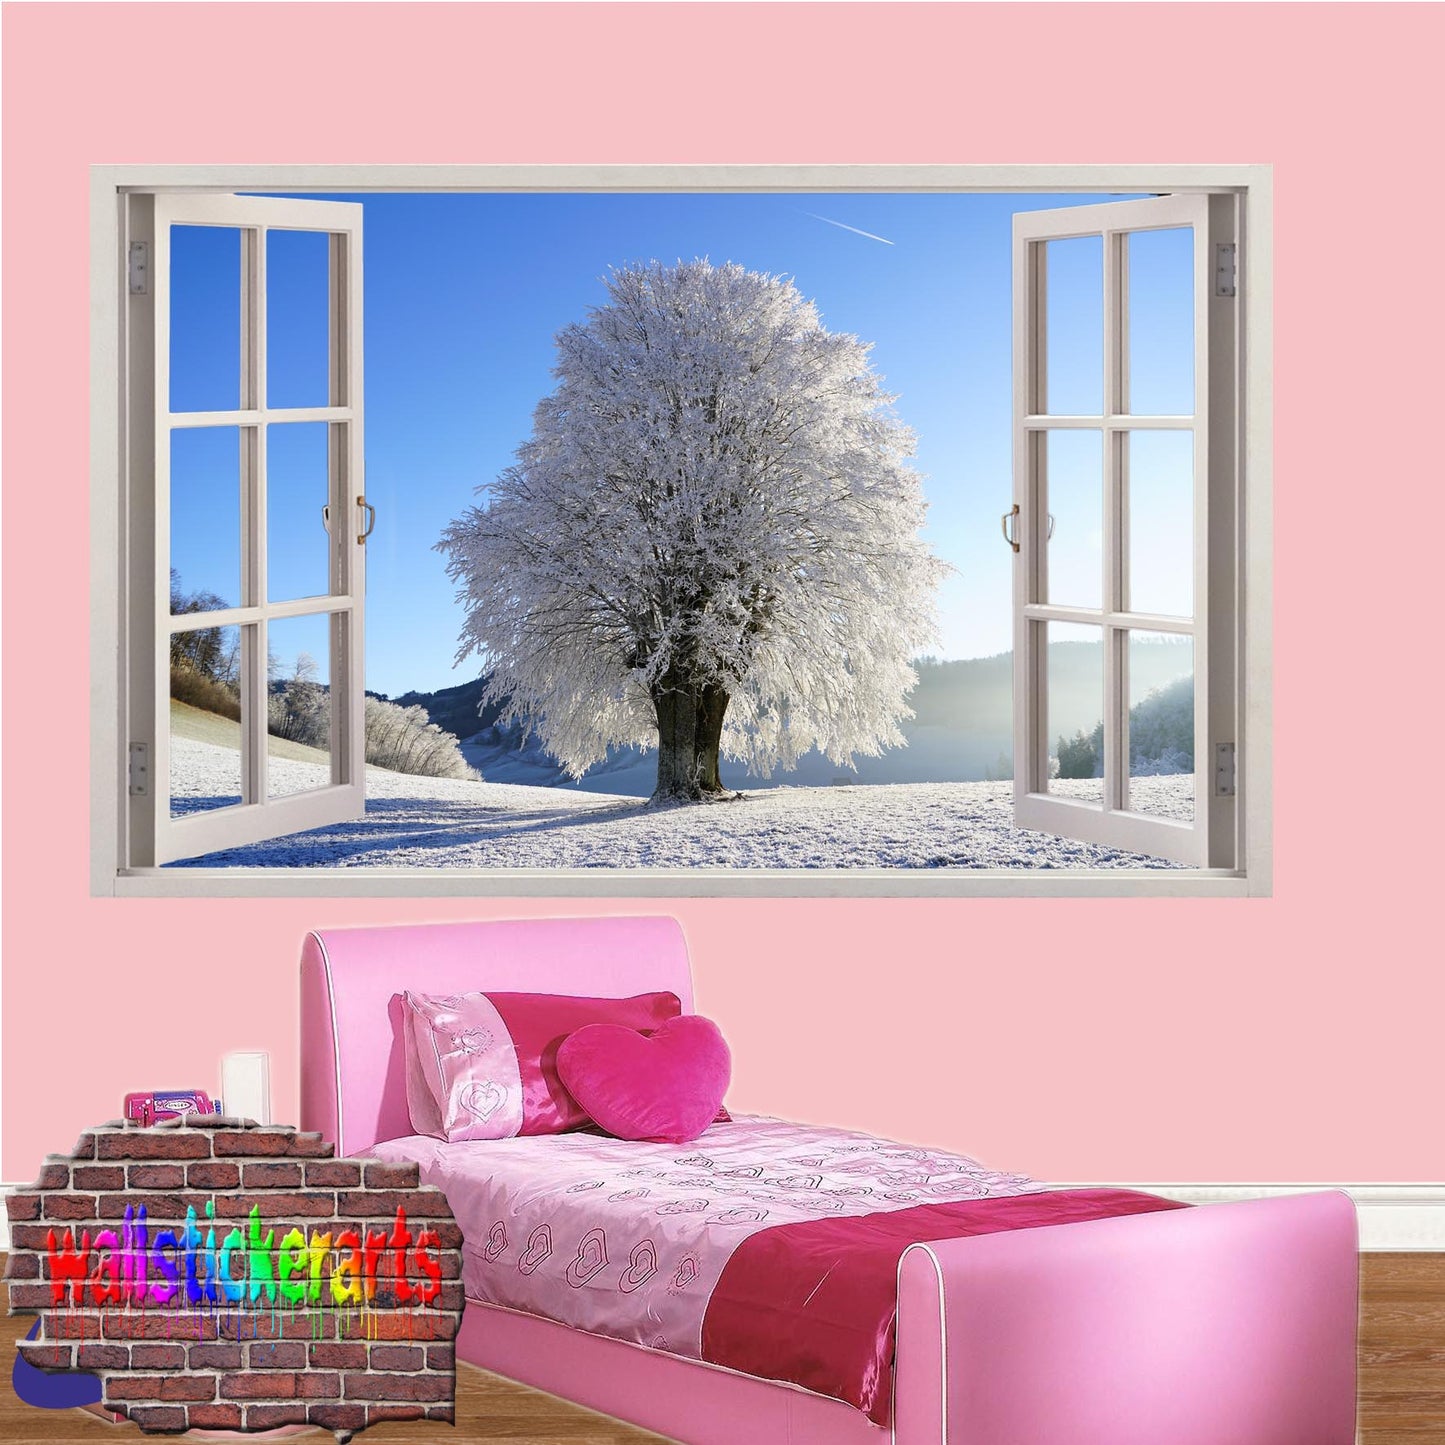 Frozen Tree Snow Scenery 3d Art Wall Sticker Mural Room Office Shop Home Decor Decal ZE9